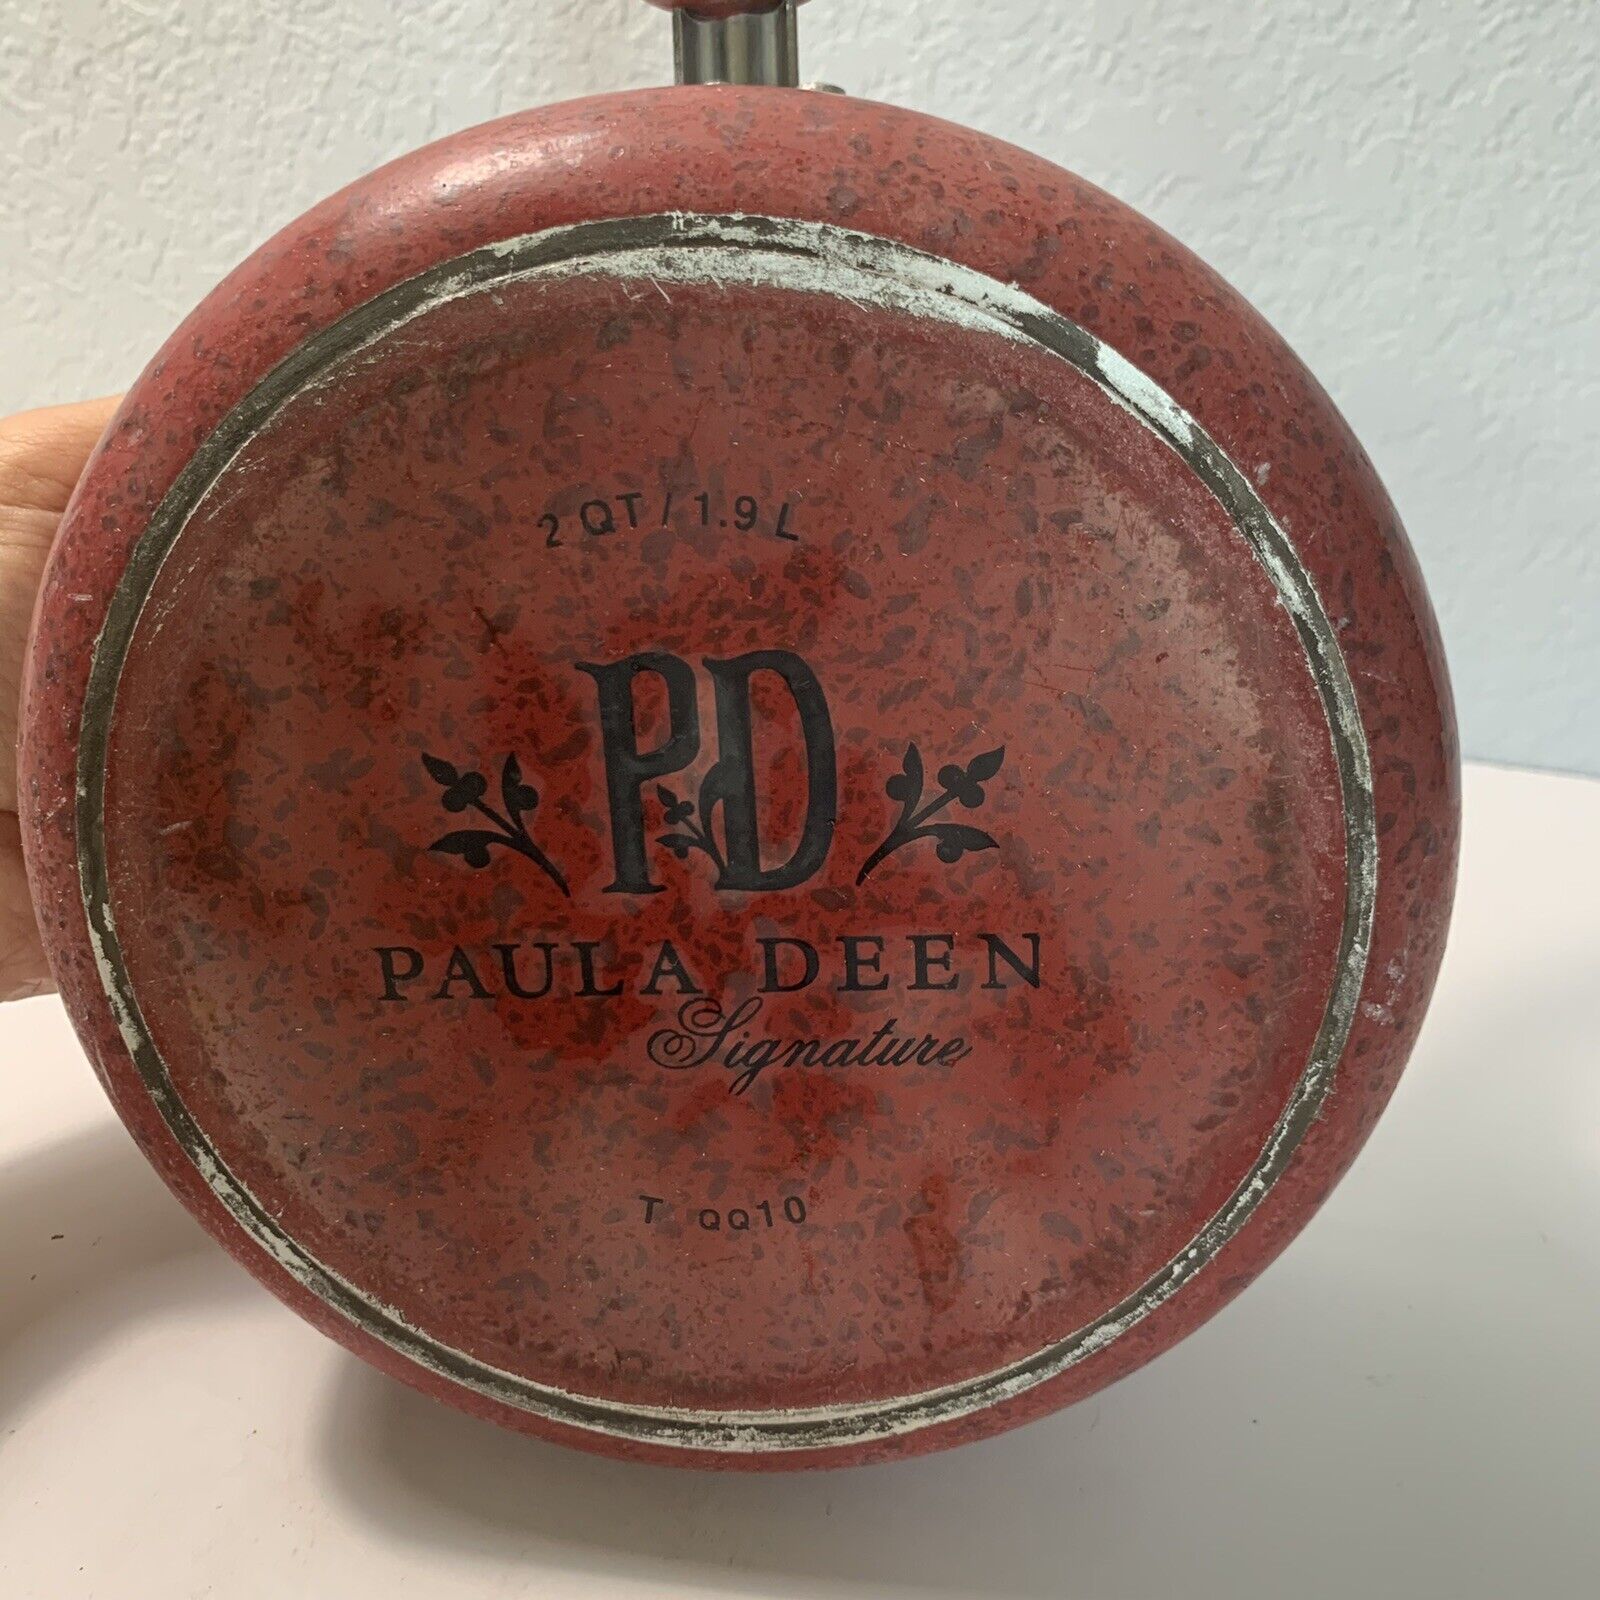 Paula Deen 16991 Riverbend Nonstick Cookware Pots and Pans Set, 12 Piece,  Red Speckle